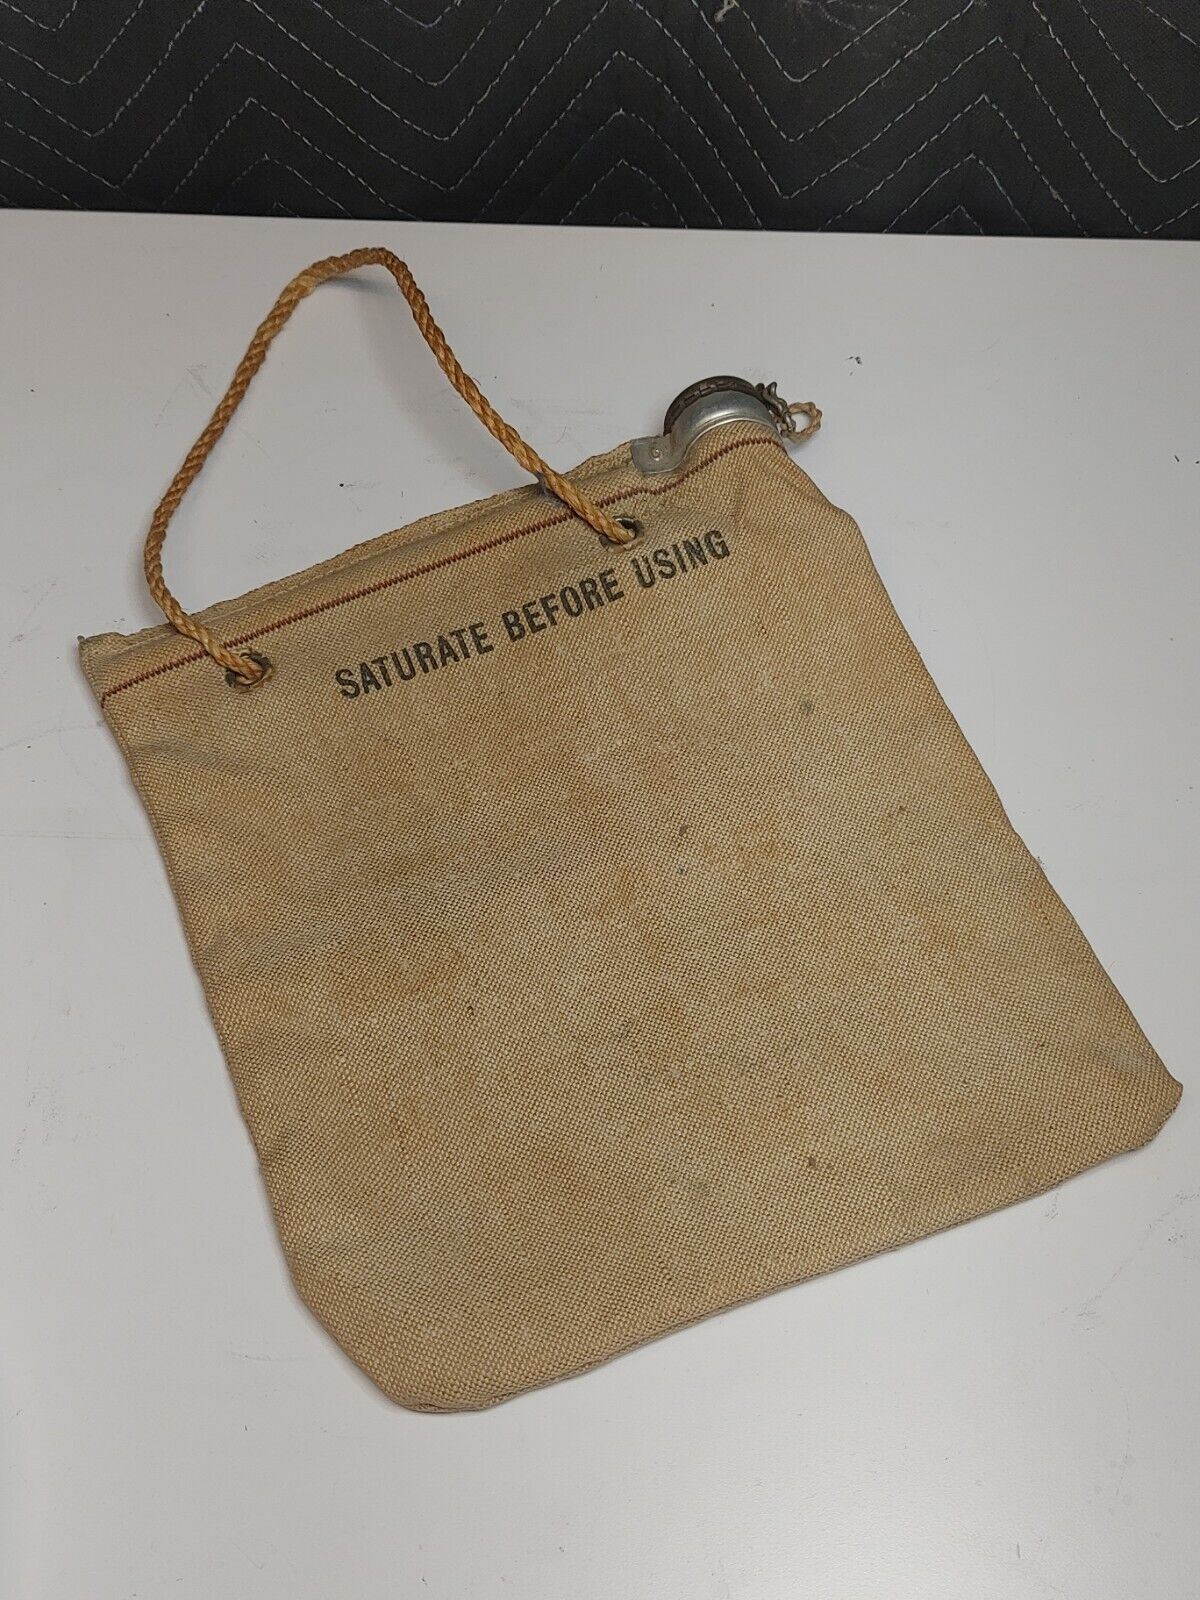 Vintage Desert BRAND Water Bag AMES HARRIS NEVILLE CO SAN FRANCISCO USA